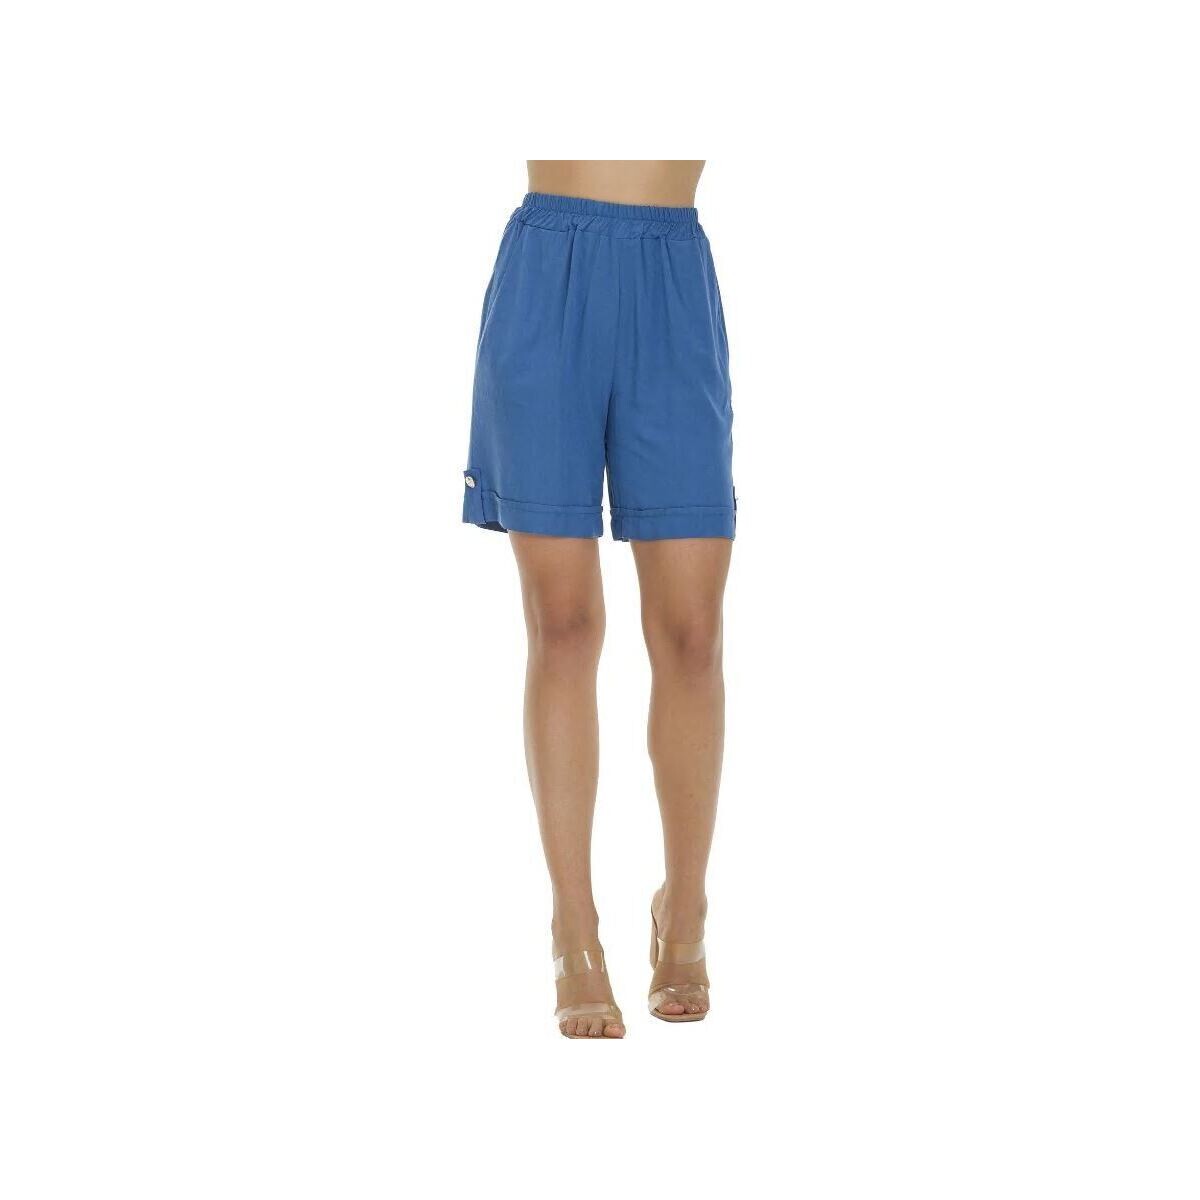 Abbigliamento Donna Shorts / Bermuda Take.two DKE5481 AZ-UNICA - Shorts con Blu